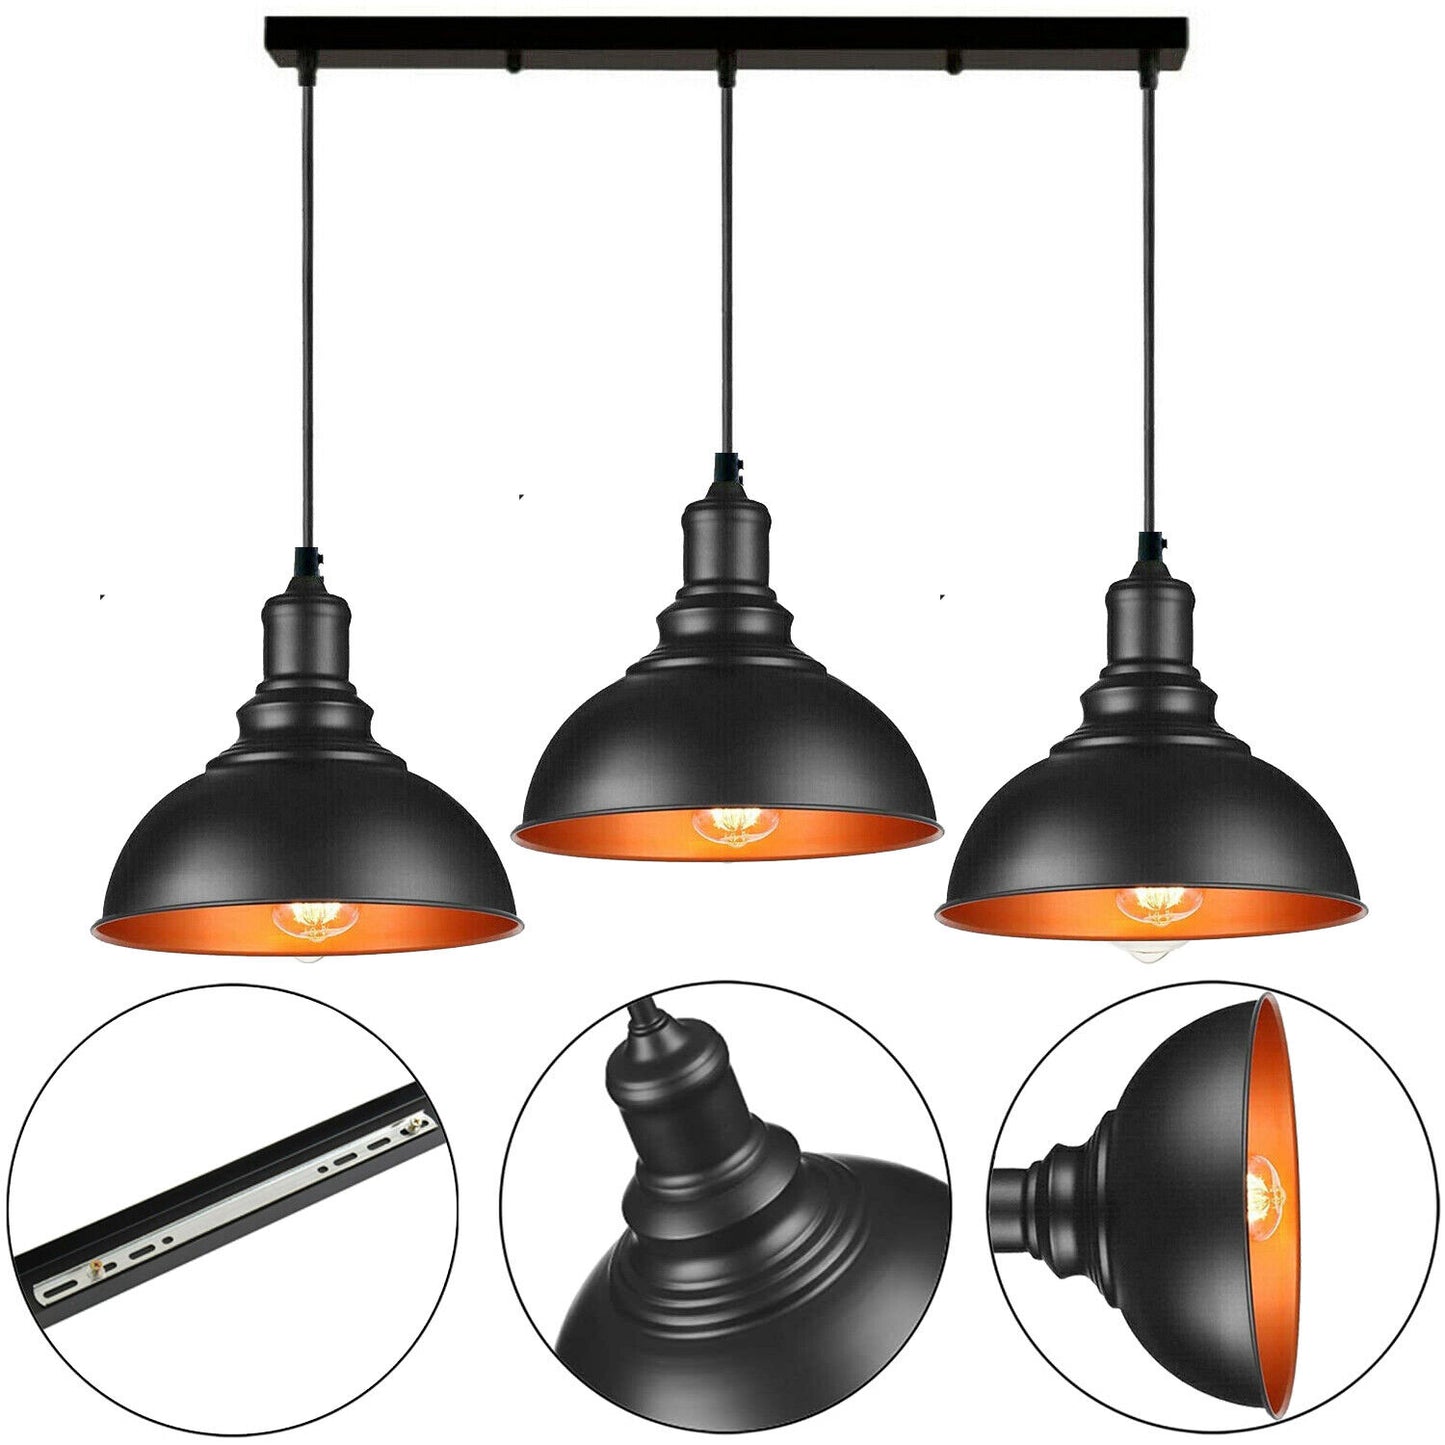  Three Pendant Lamp Shade